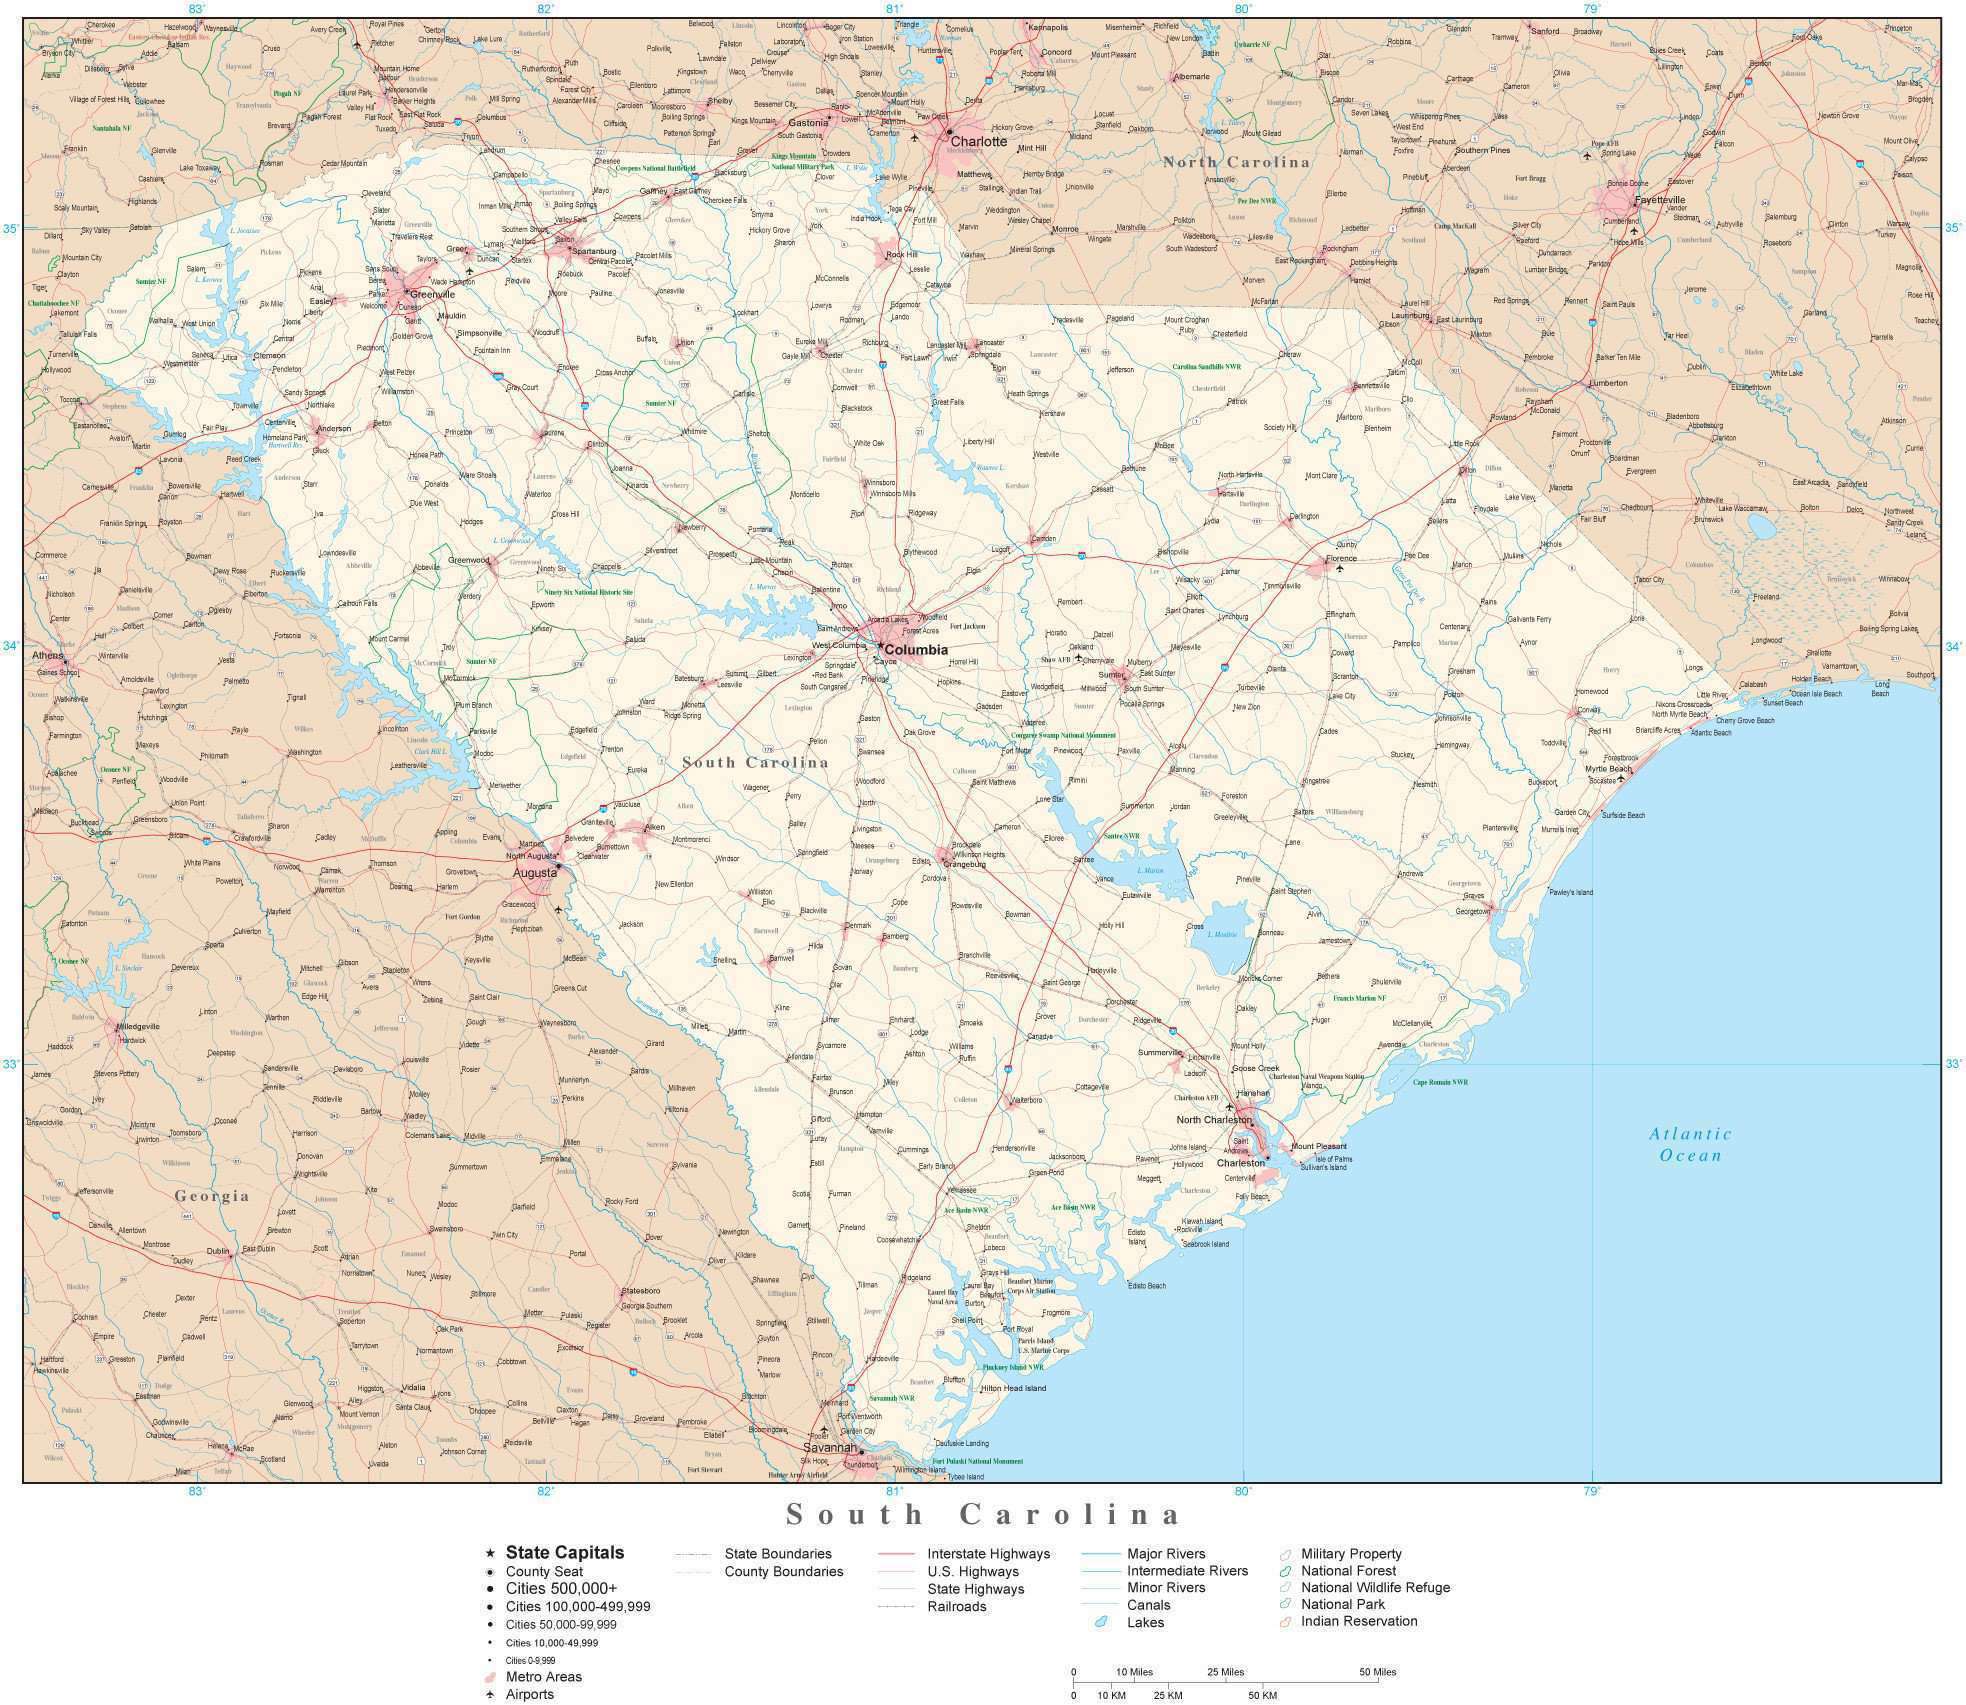 South Carolina Detailed Map In Adobe Illustrator Vector Format